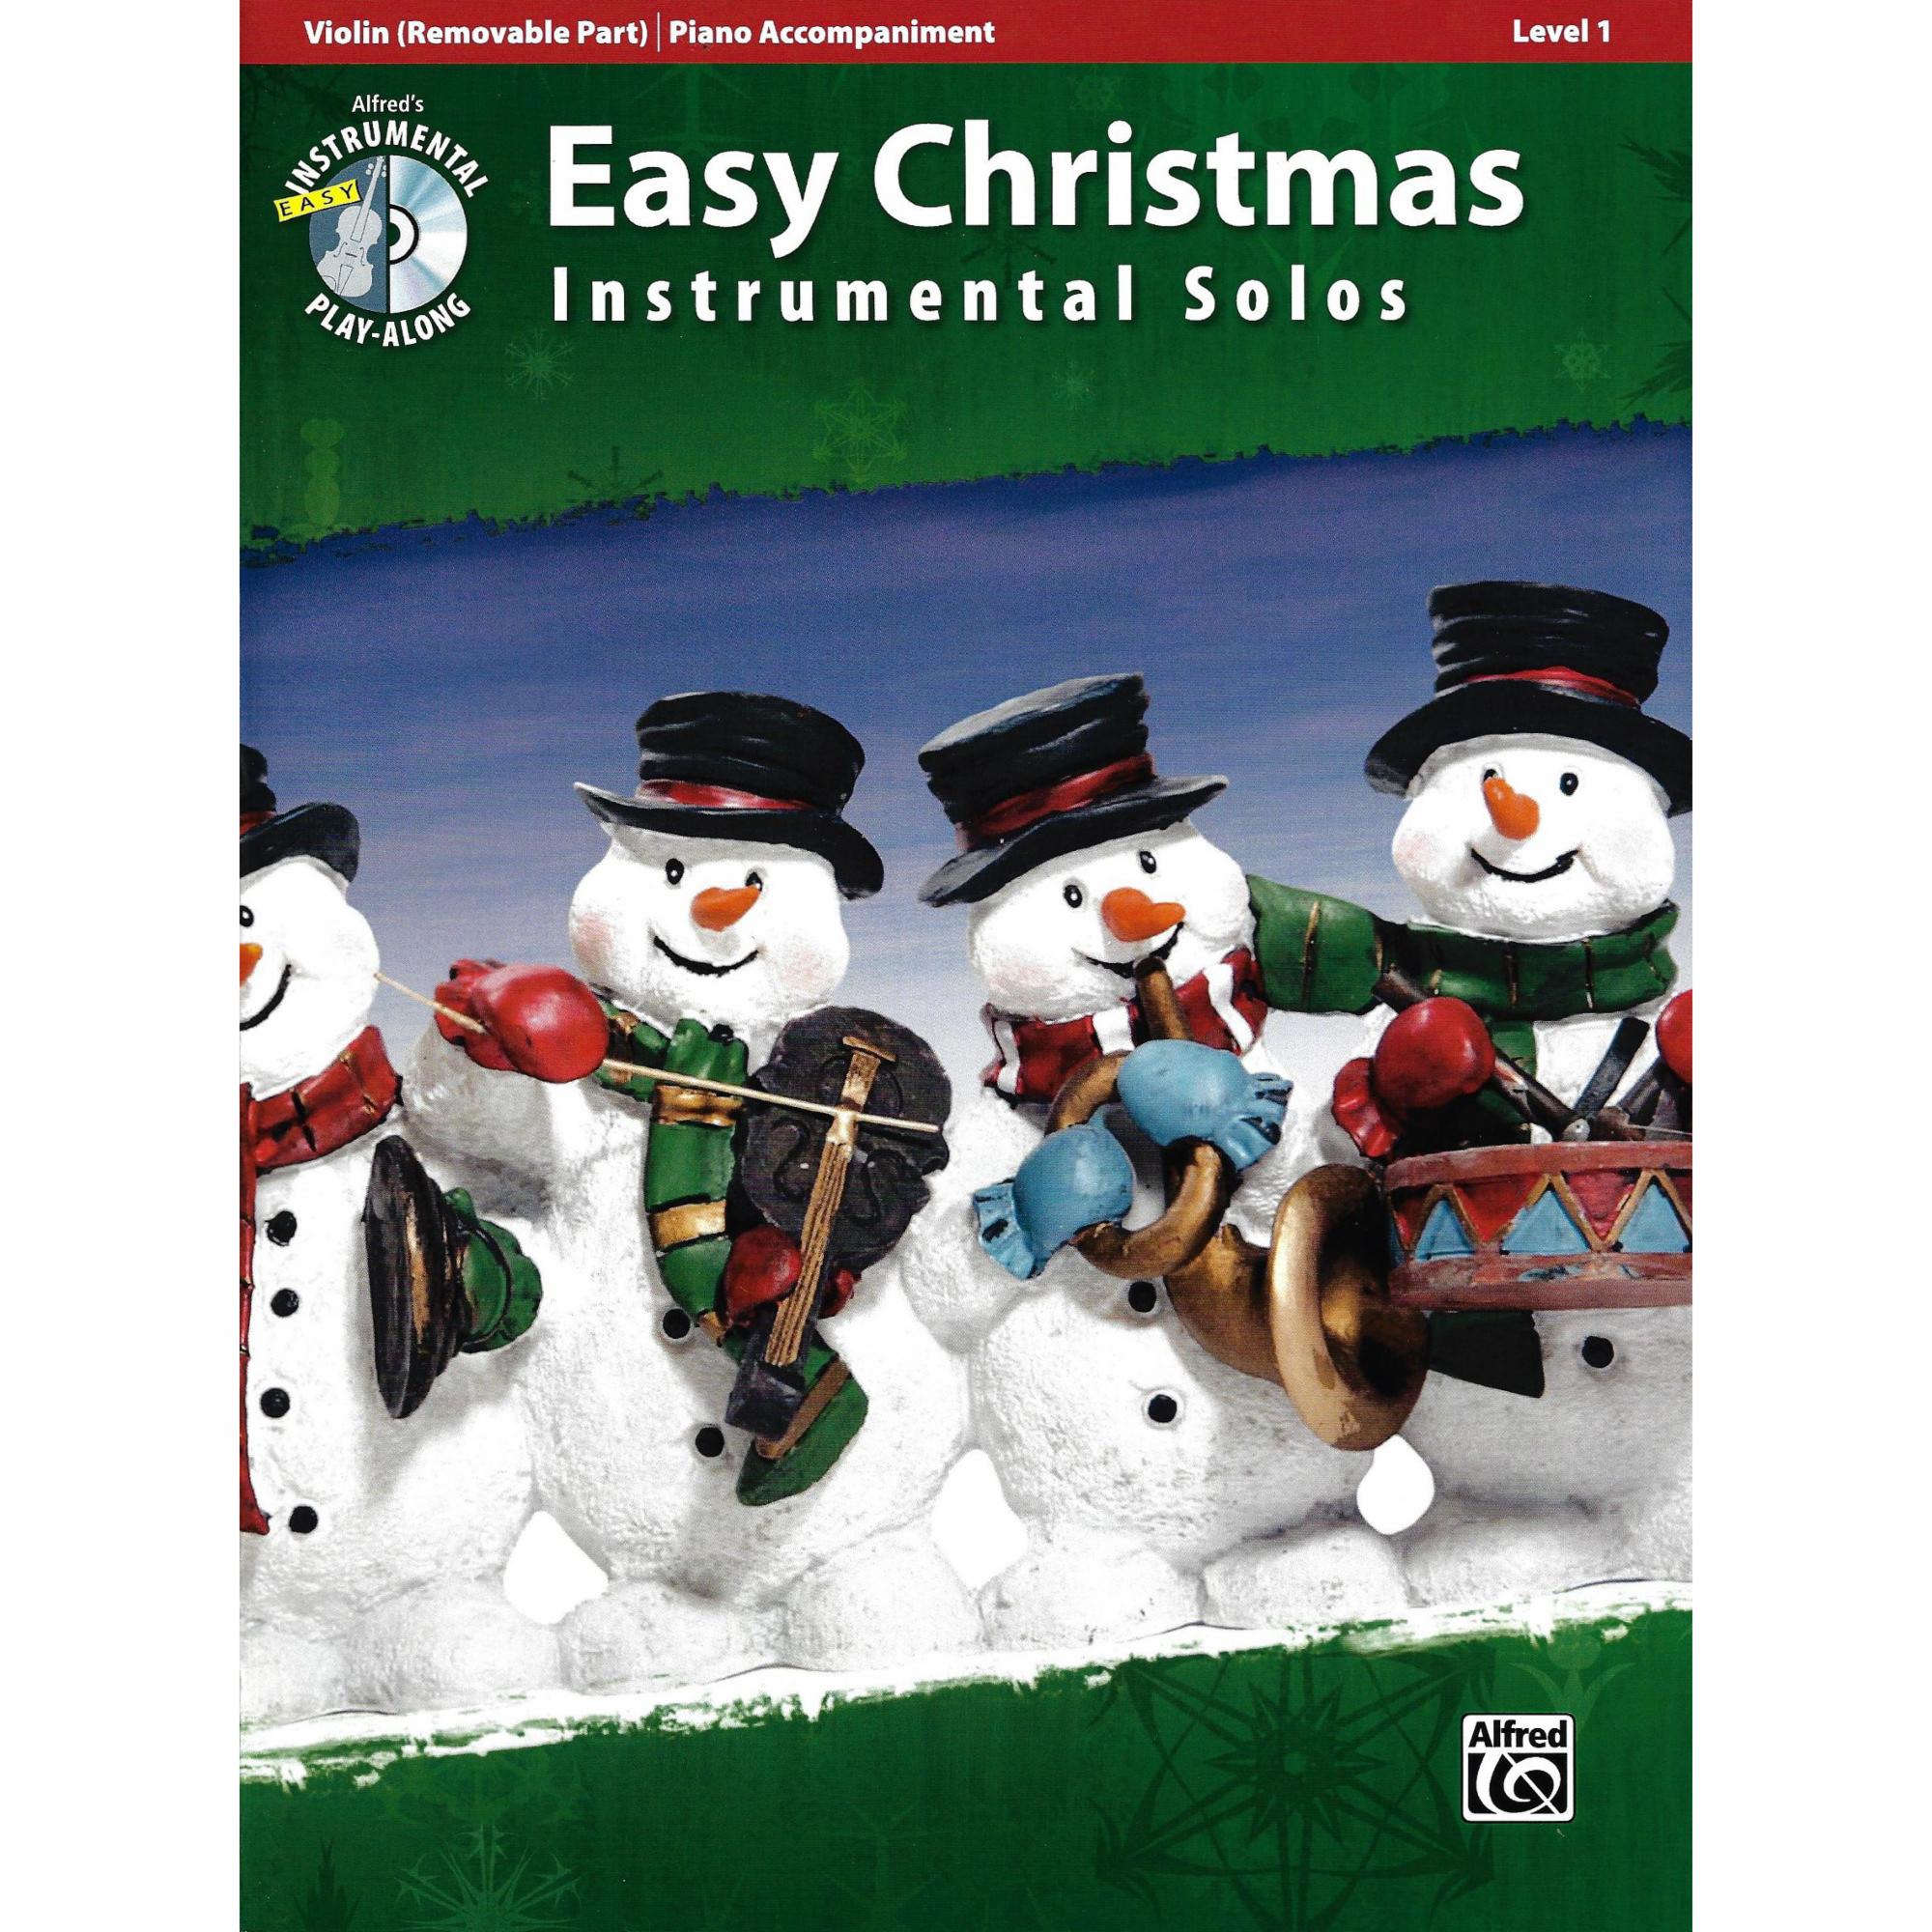 Easy Christmas Solos for Violin, Viola, or Cello and Piano